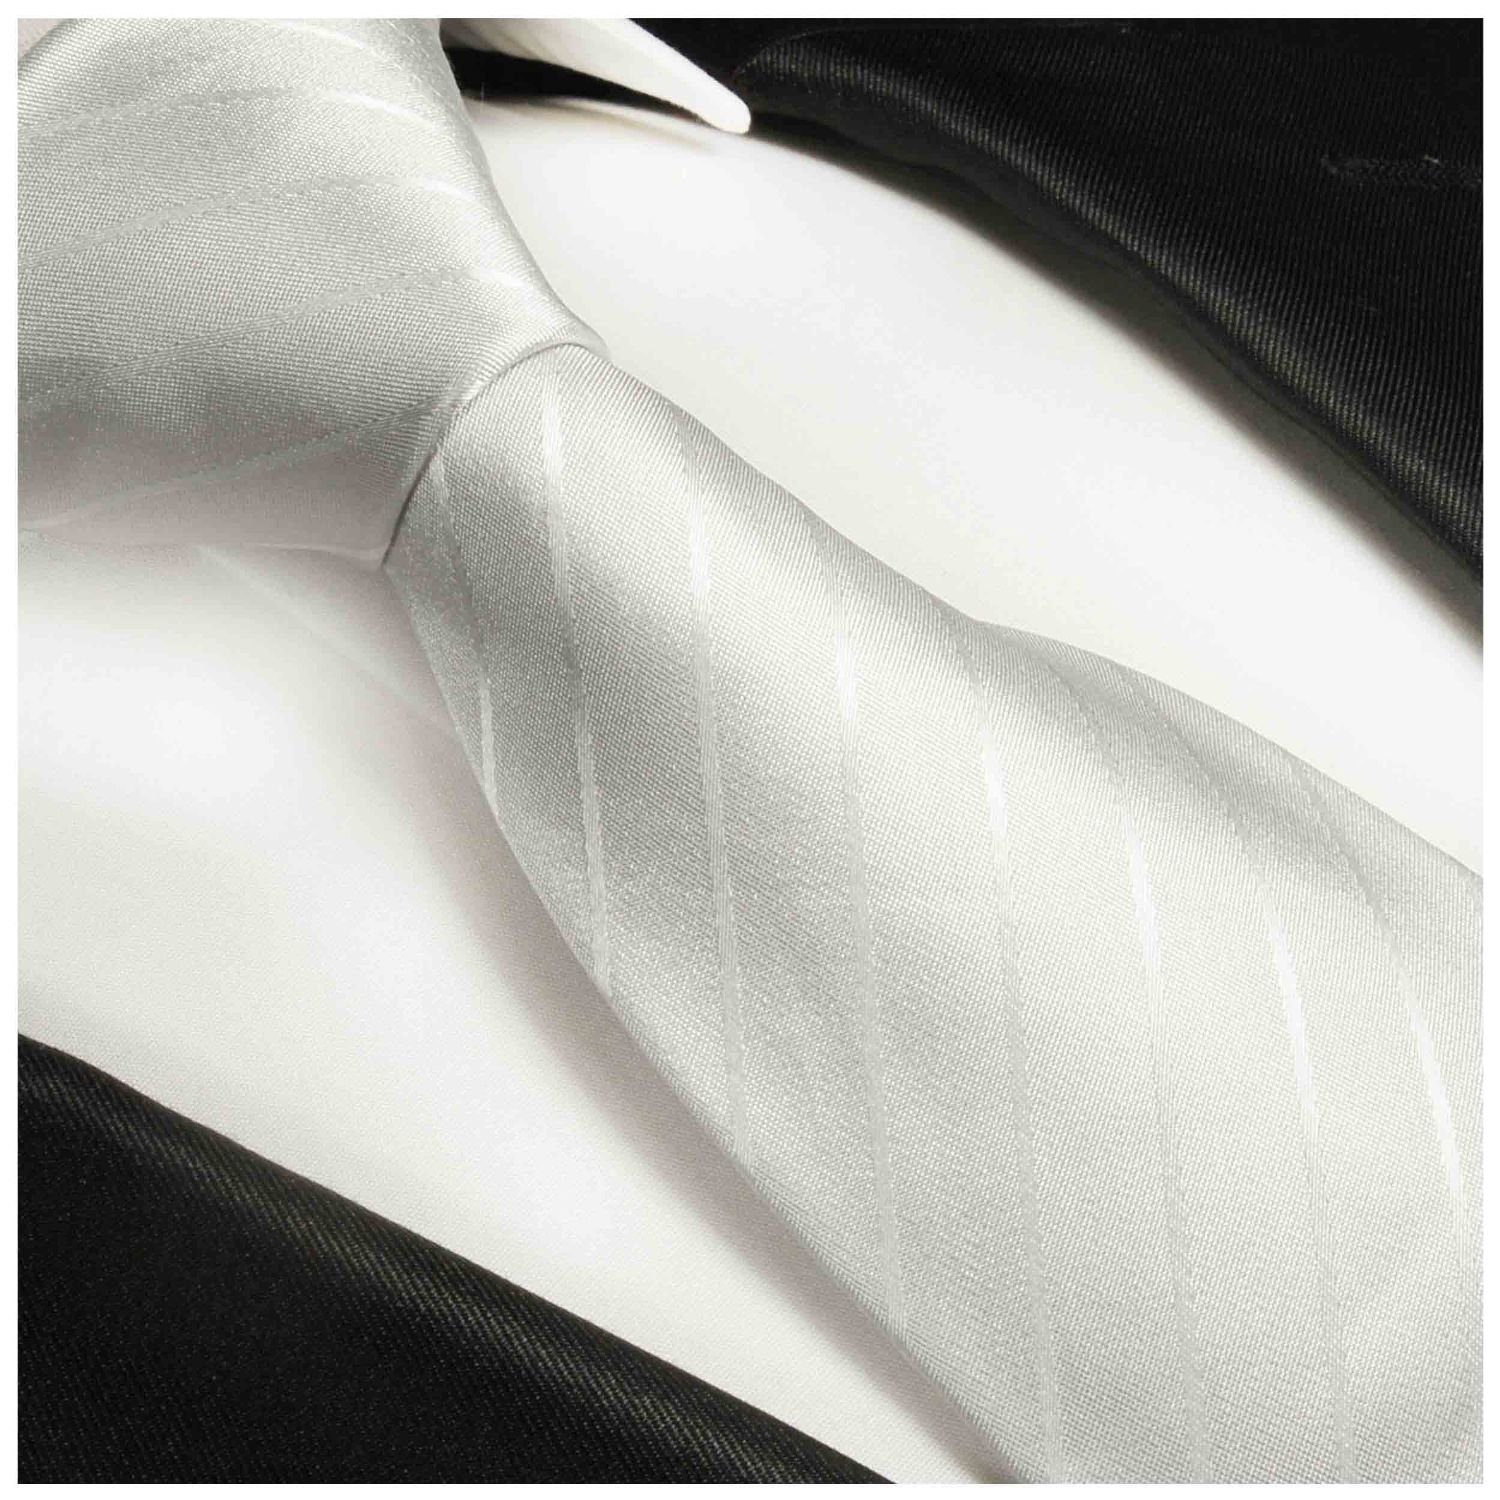 Paul Malone Krawatte Moderne gestreift (8cm), Herren Breit Seide Seidenkrawatte weiß 100% ivory 992